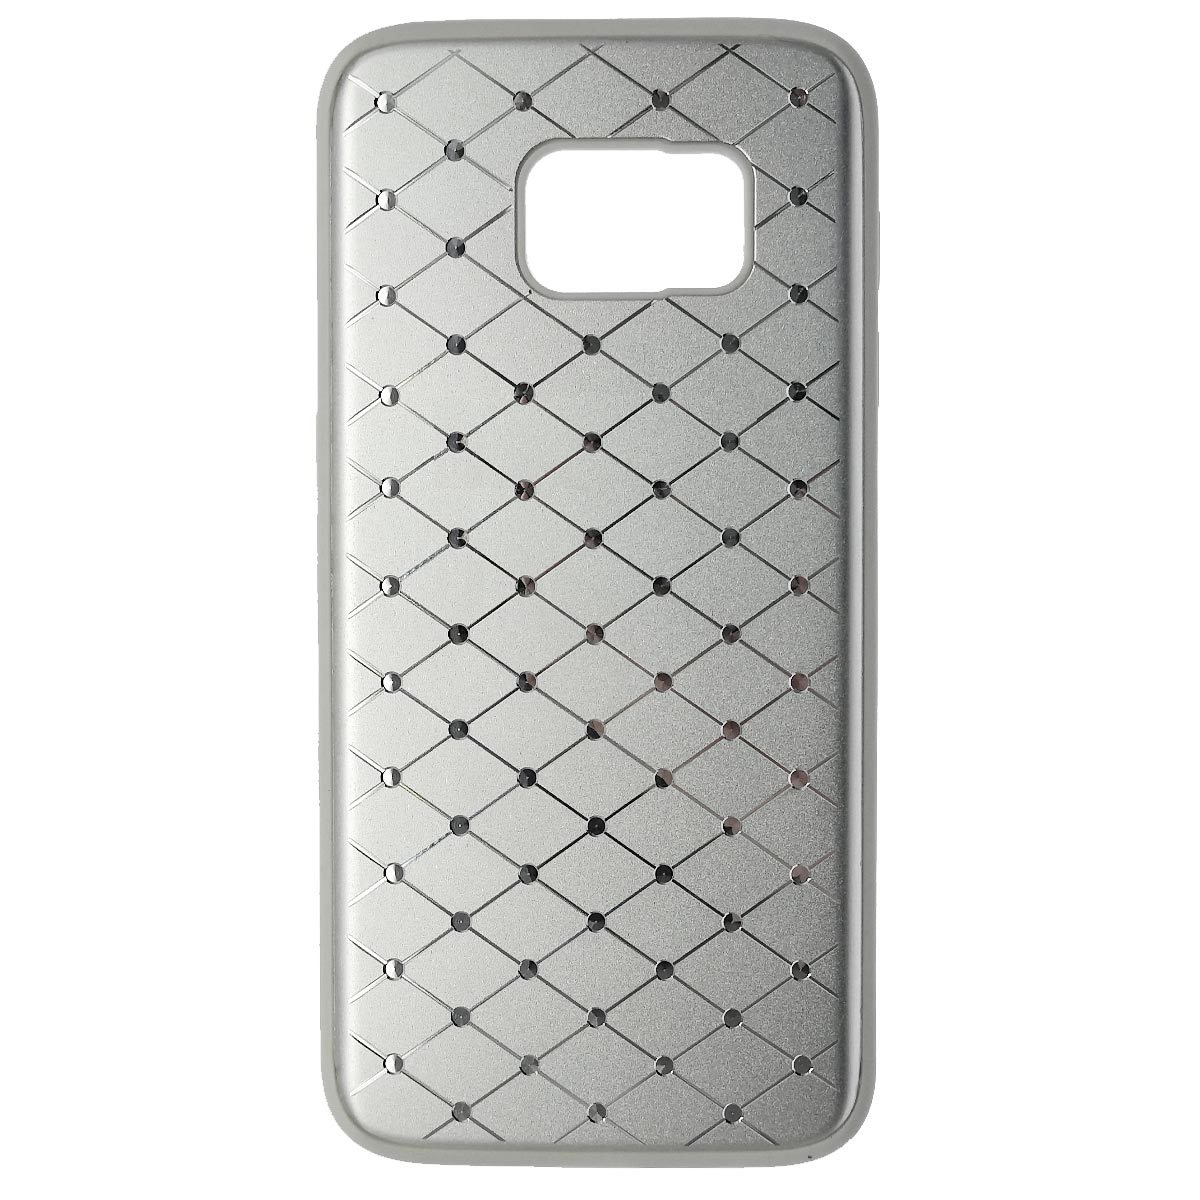 Чехол накладка для SAMSUNG Galaxy S7 (SM-G930), силикон, металл, цвет серебристый